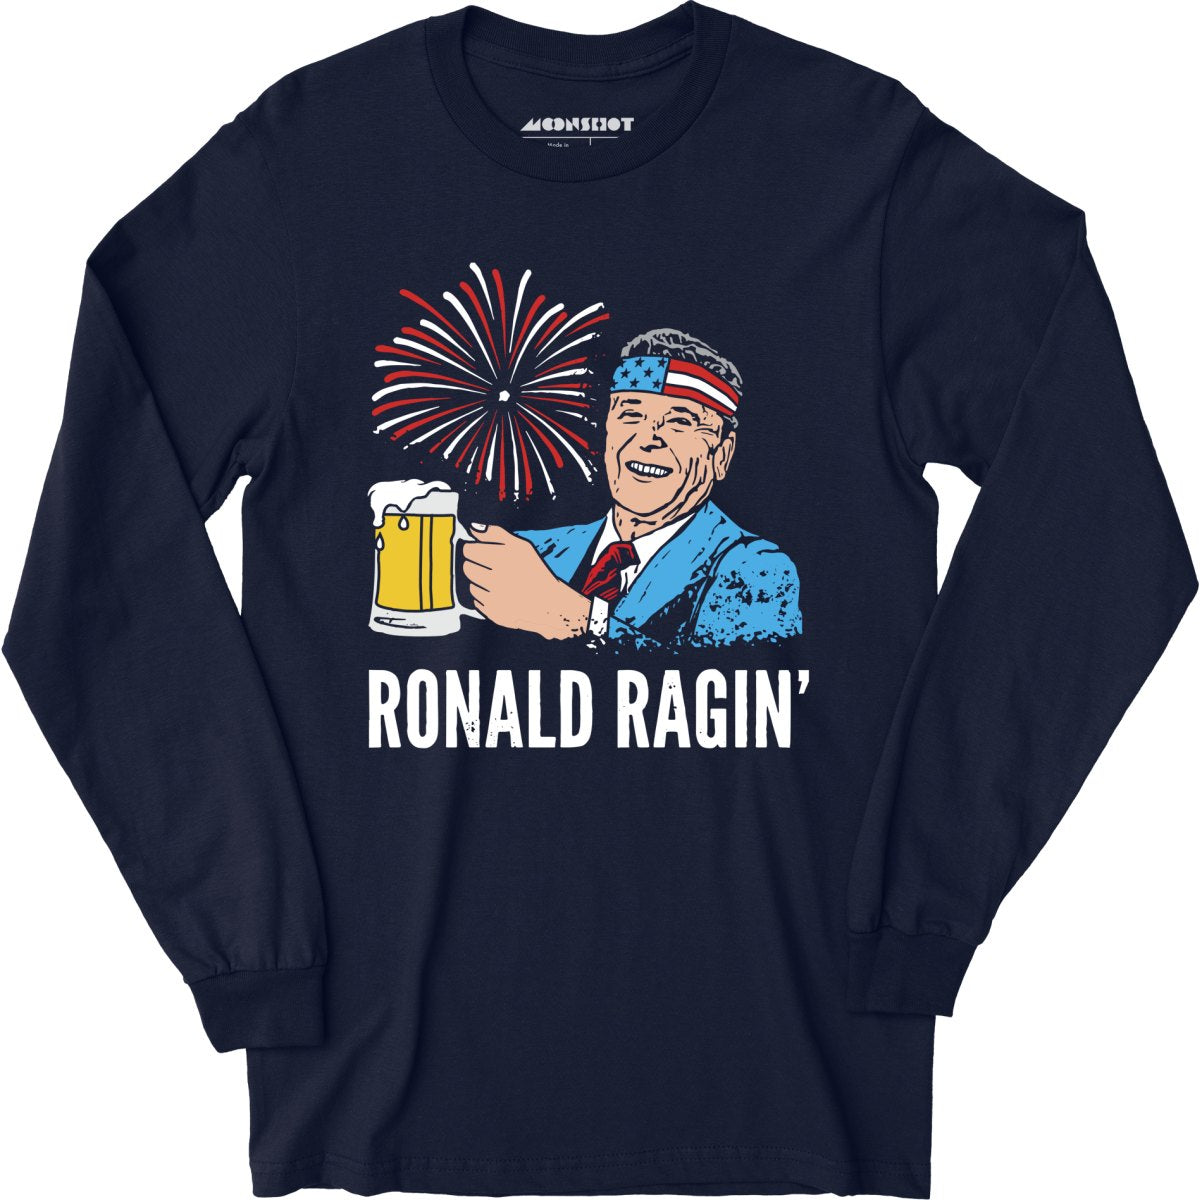 Ronald Ragin' - Long Sleeve T-Shirt